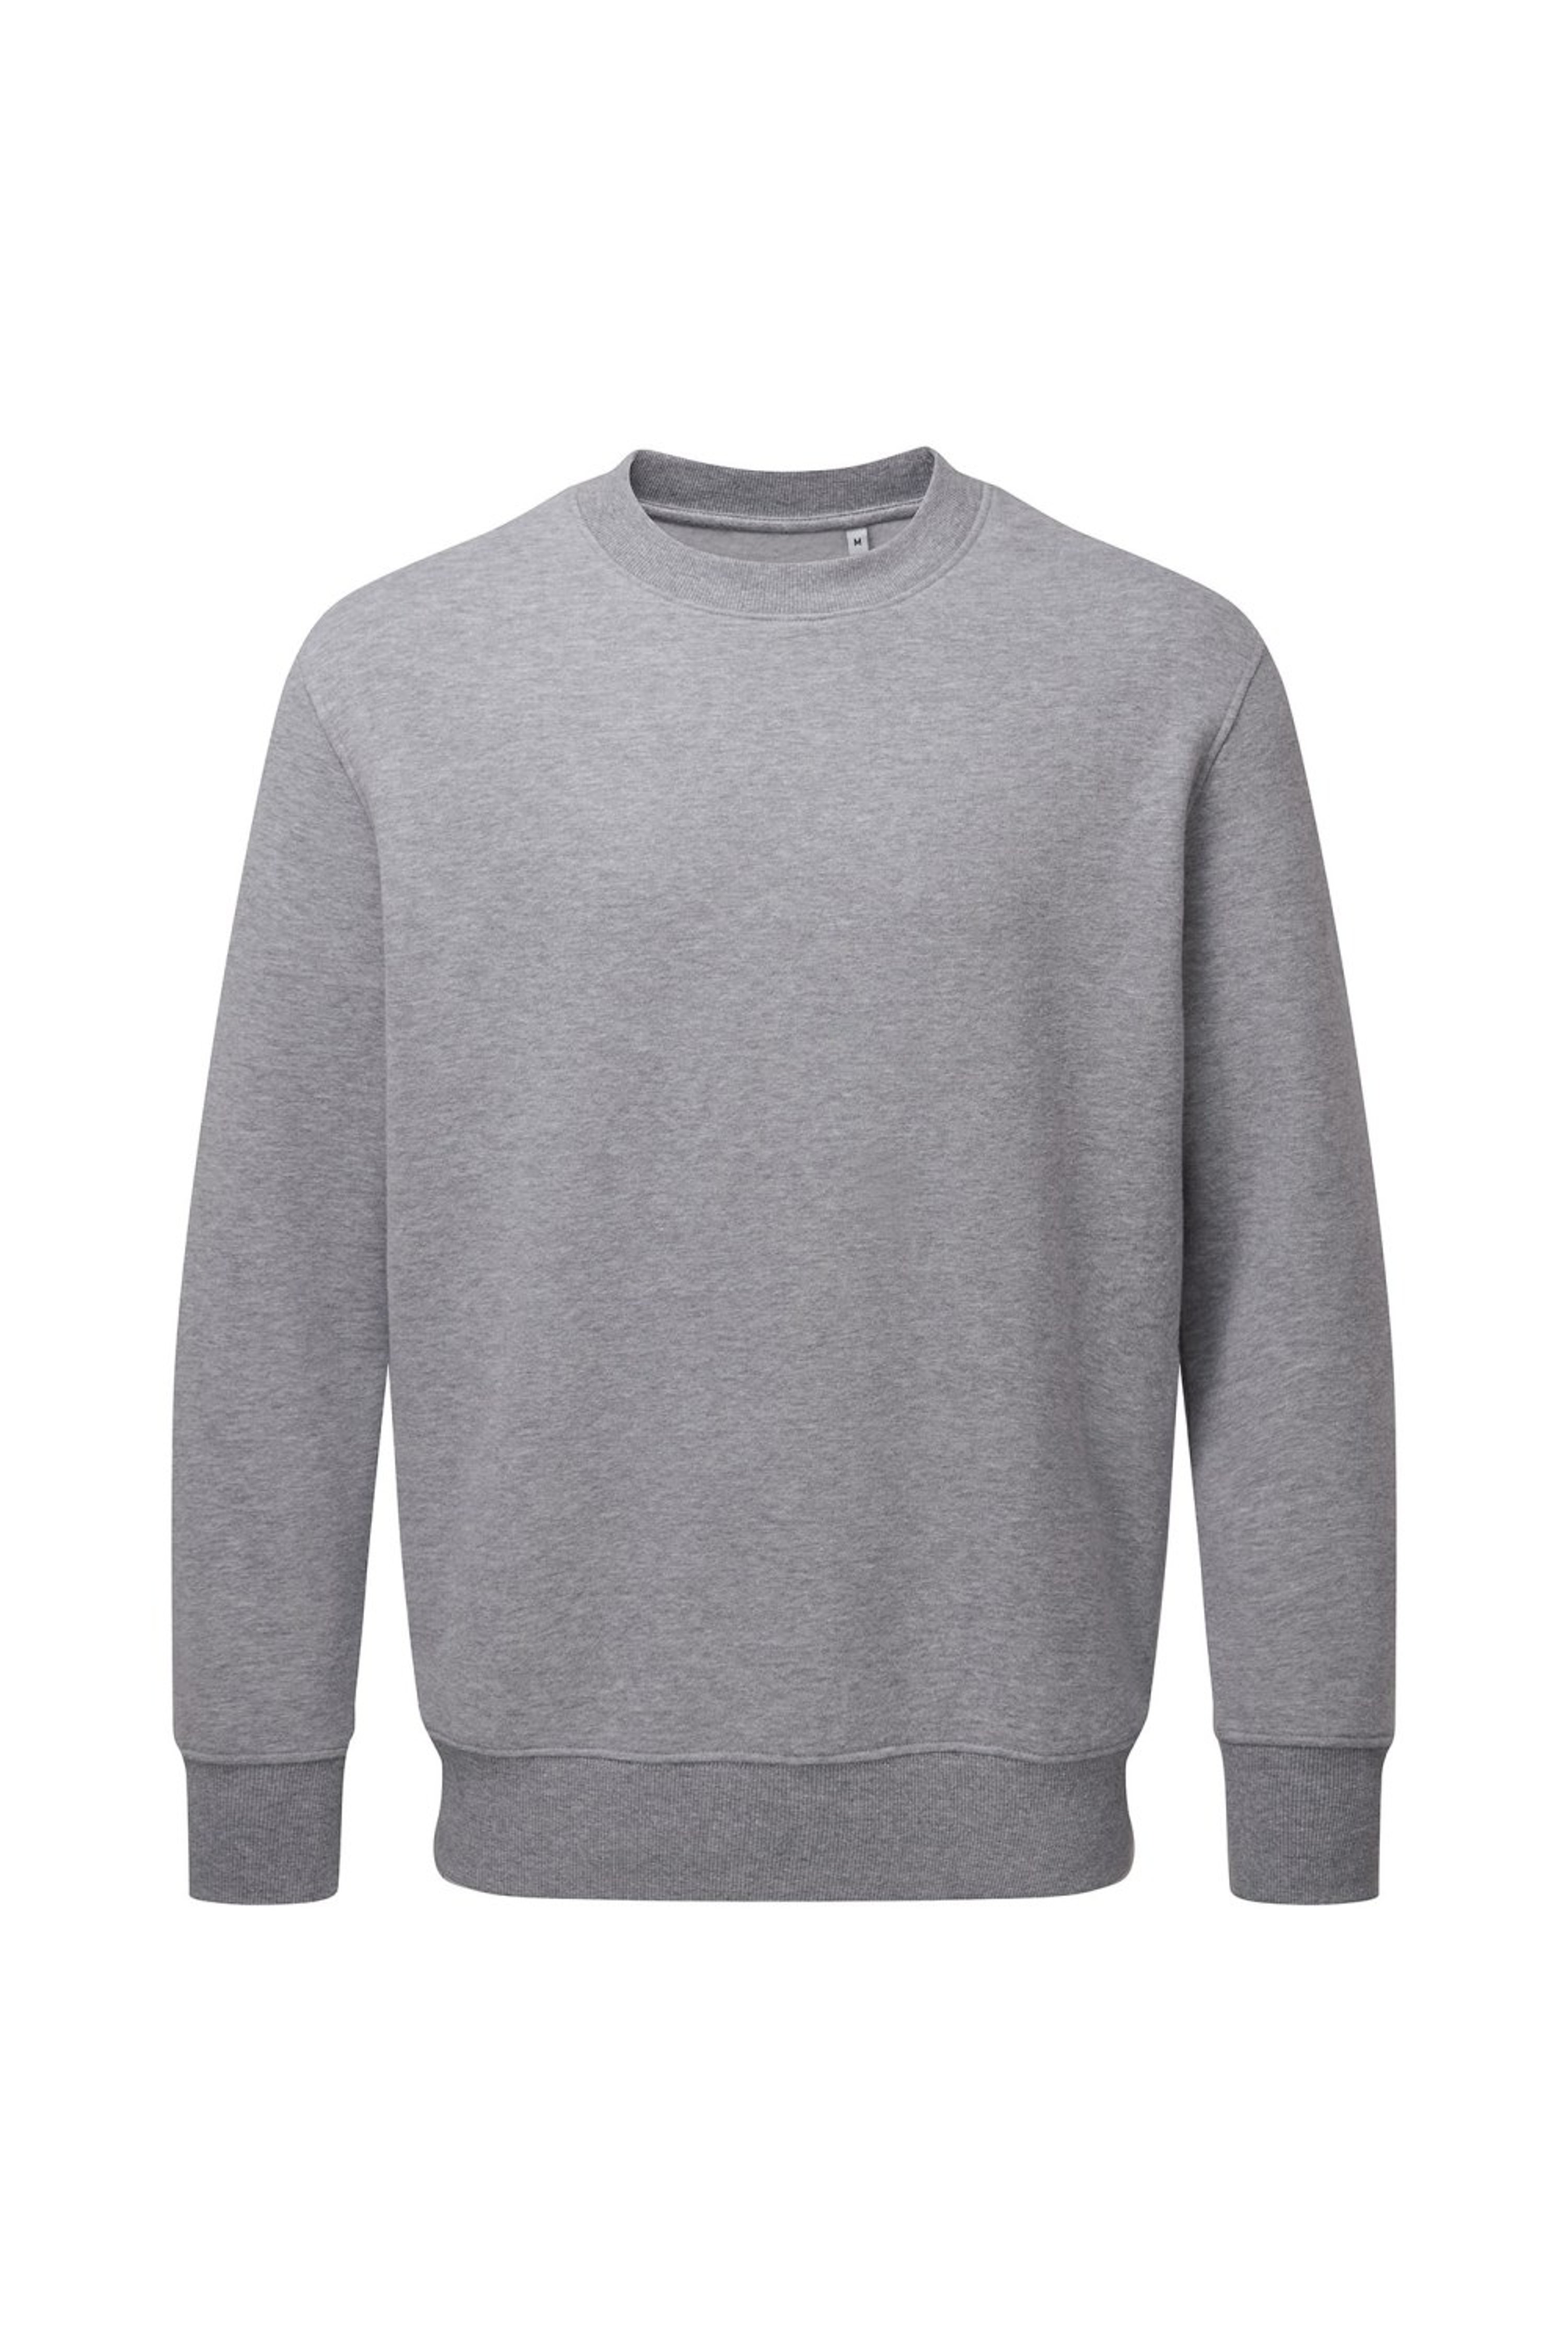 Anthem Unisex Adult Marl Sweatshirt In Grey